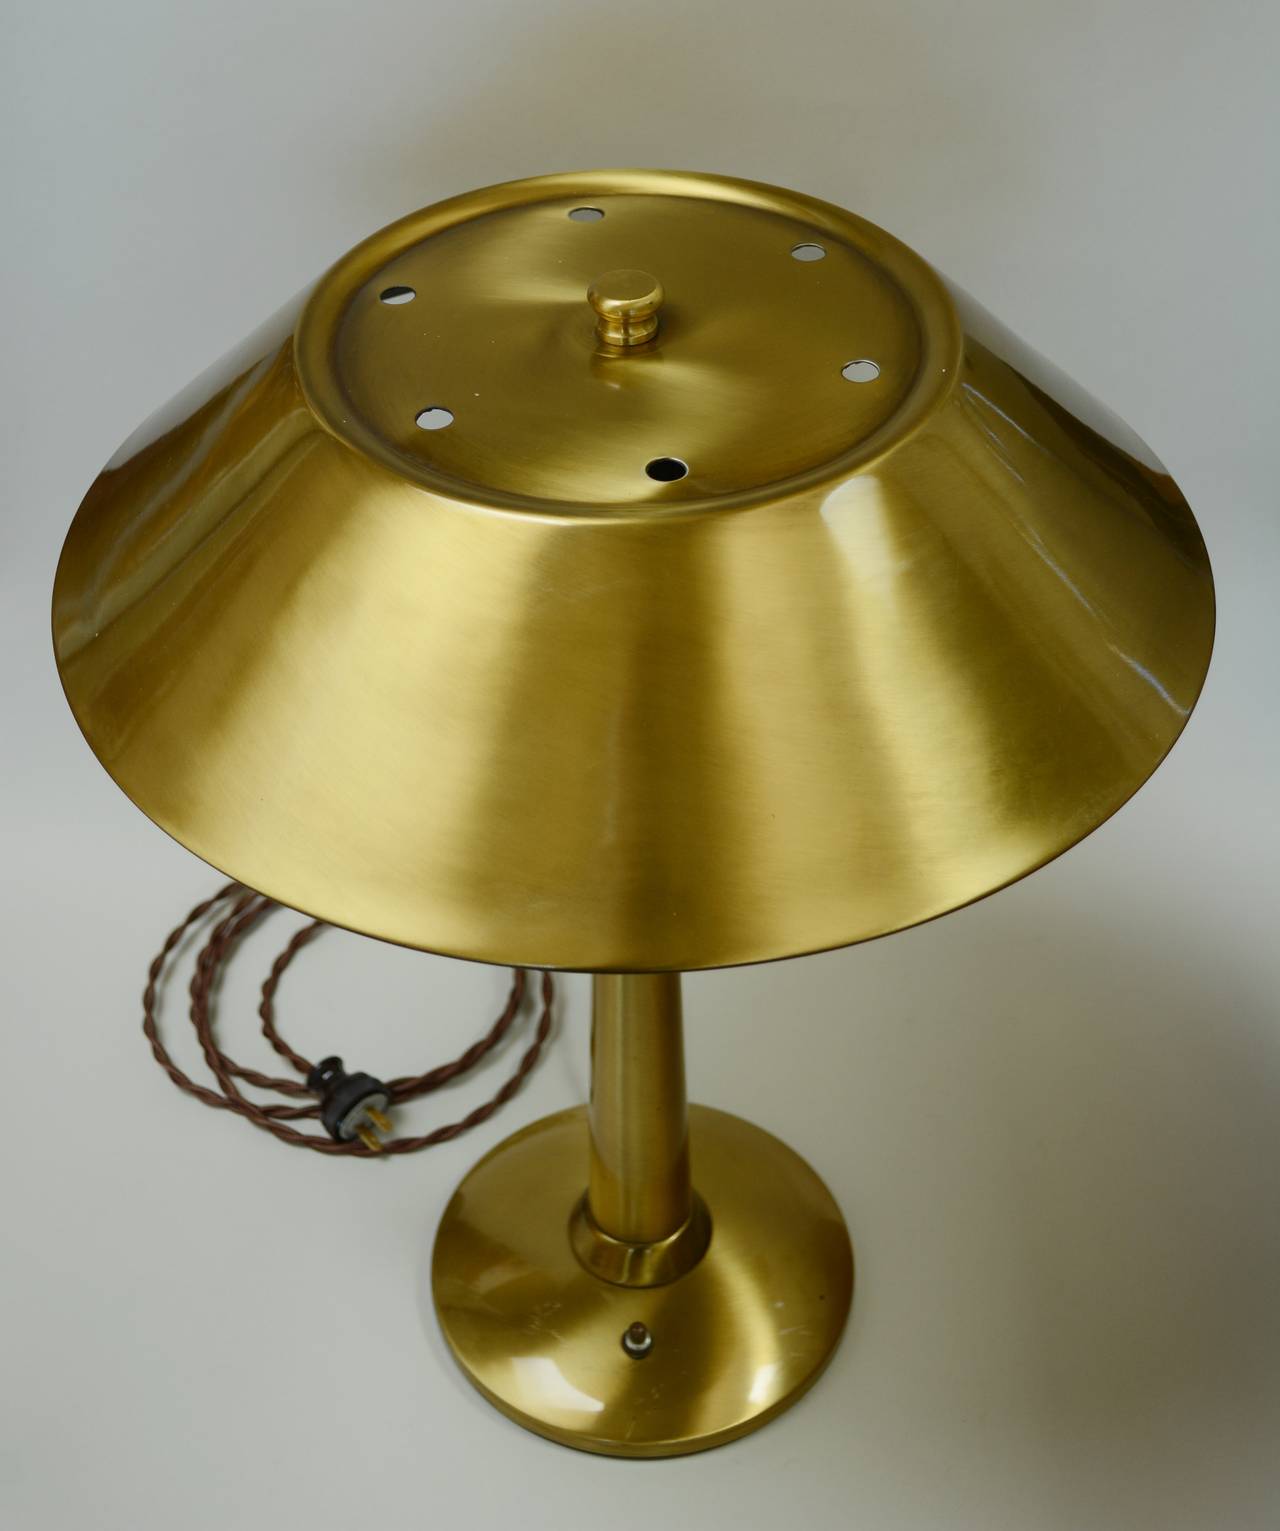 Plated Modernist Brass Desk or Table Lamp